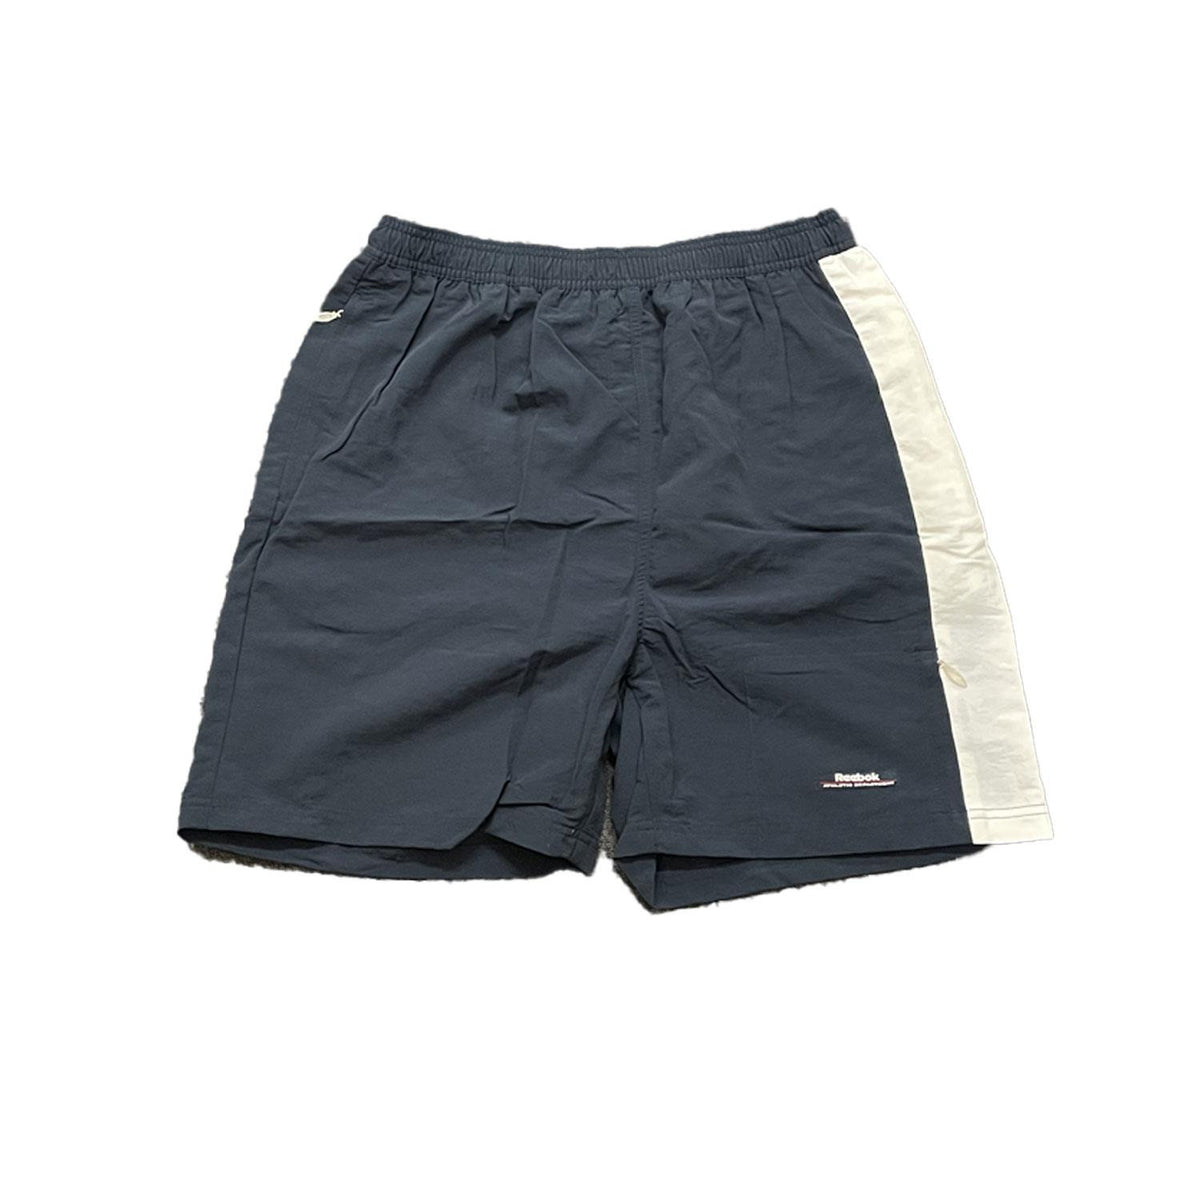 Reebok Original Mens Clearance Athletic Department Contrast Colour Shorts